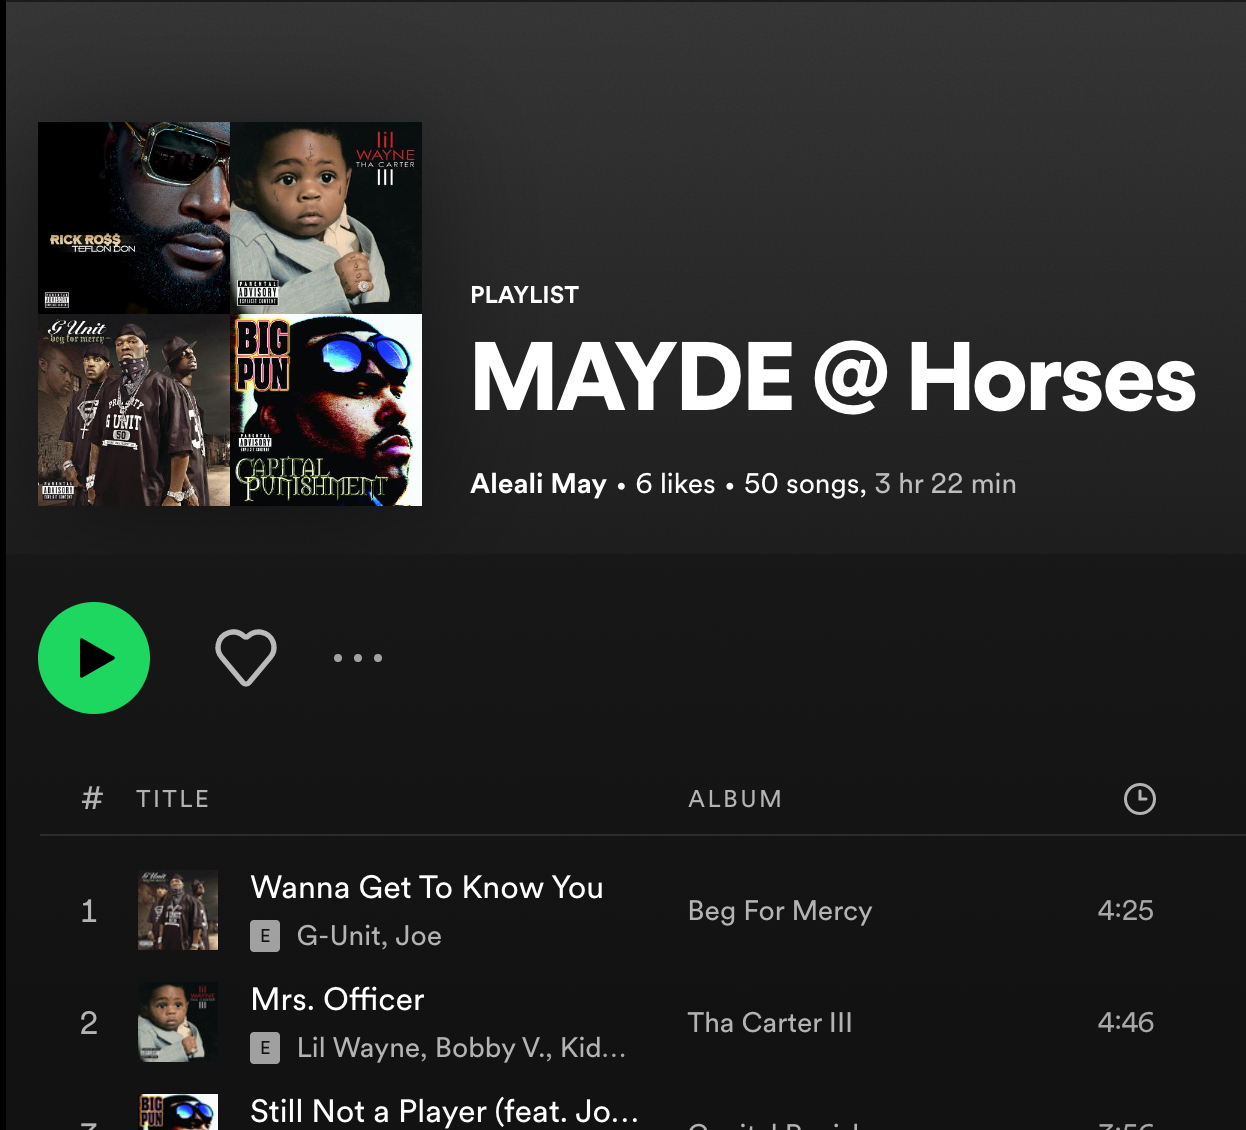 Playlist: MAYDE @ Horses